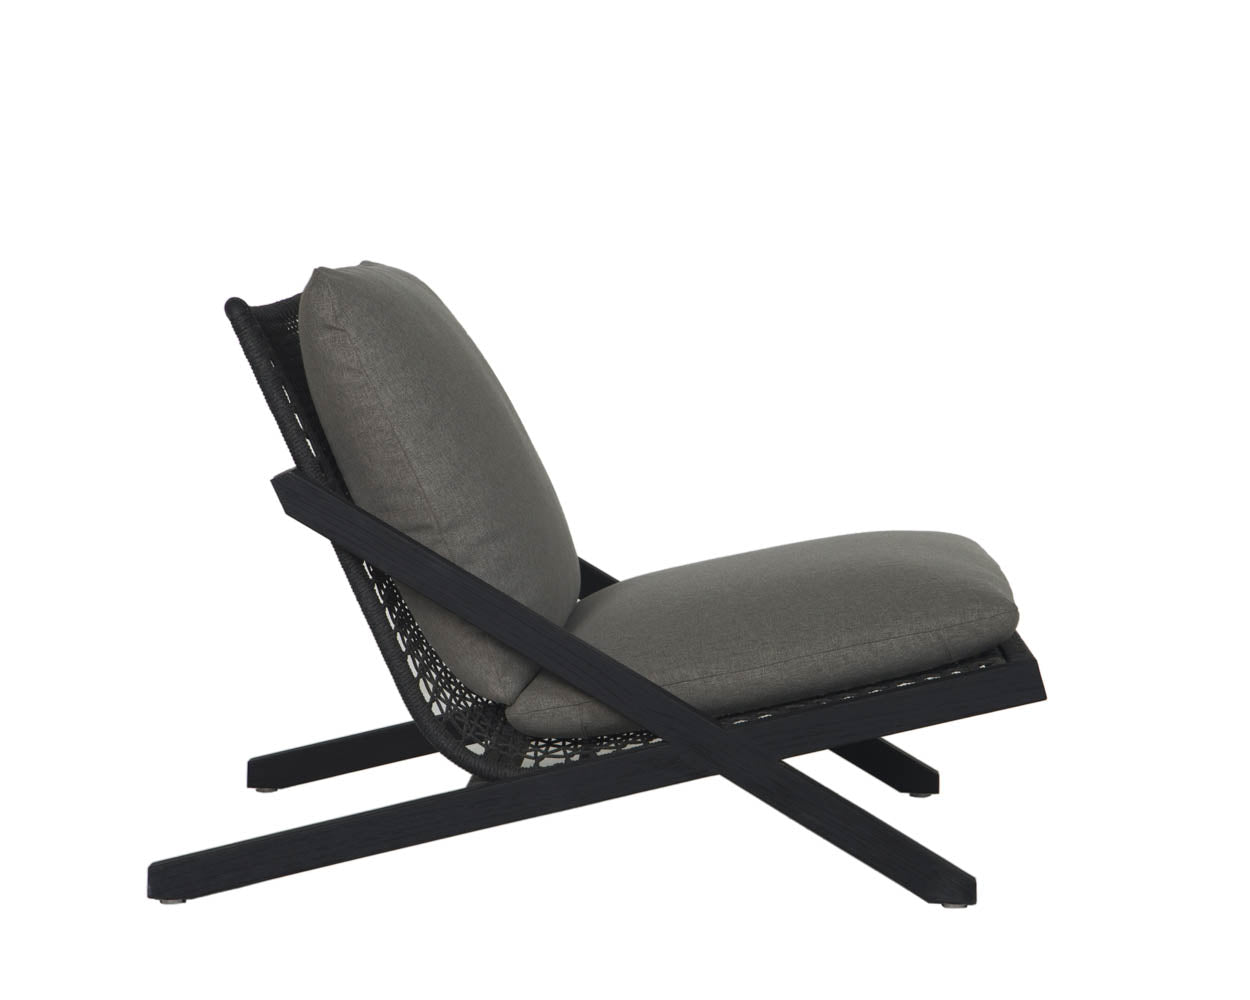 Bari Lounge Chair - Charcoal